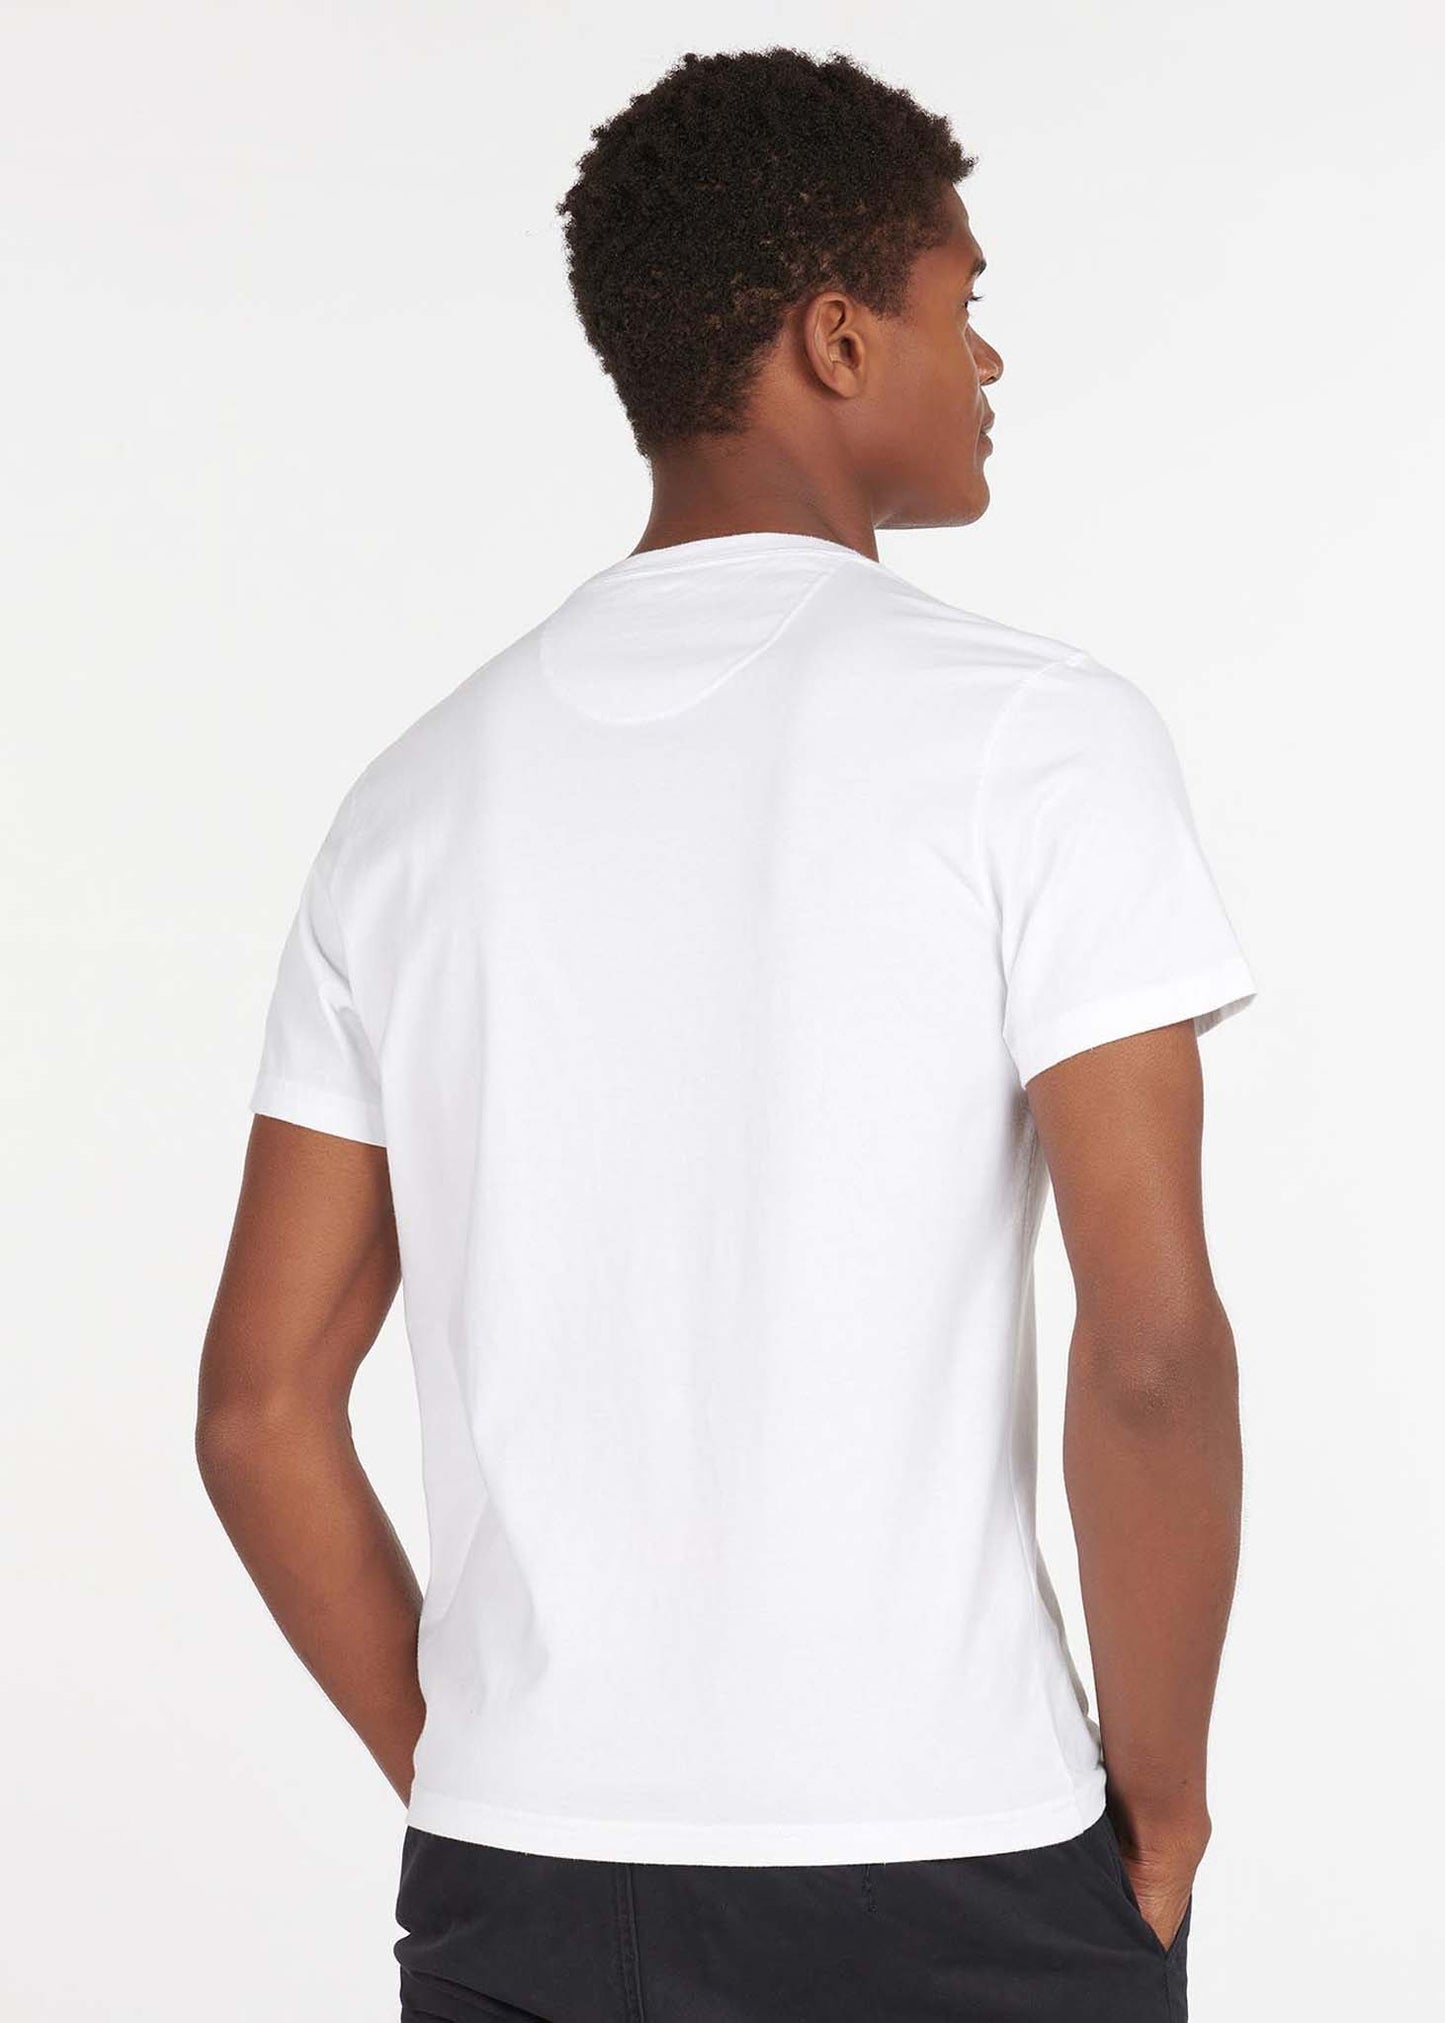 Barbour T-shirts  Logo tee - white 